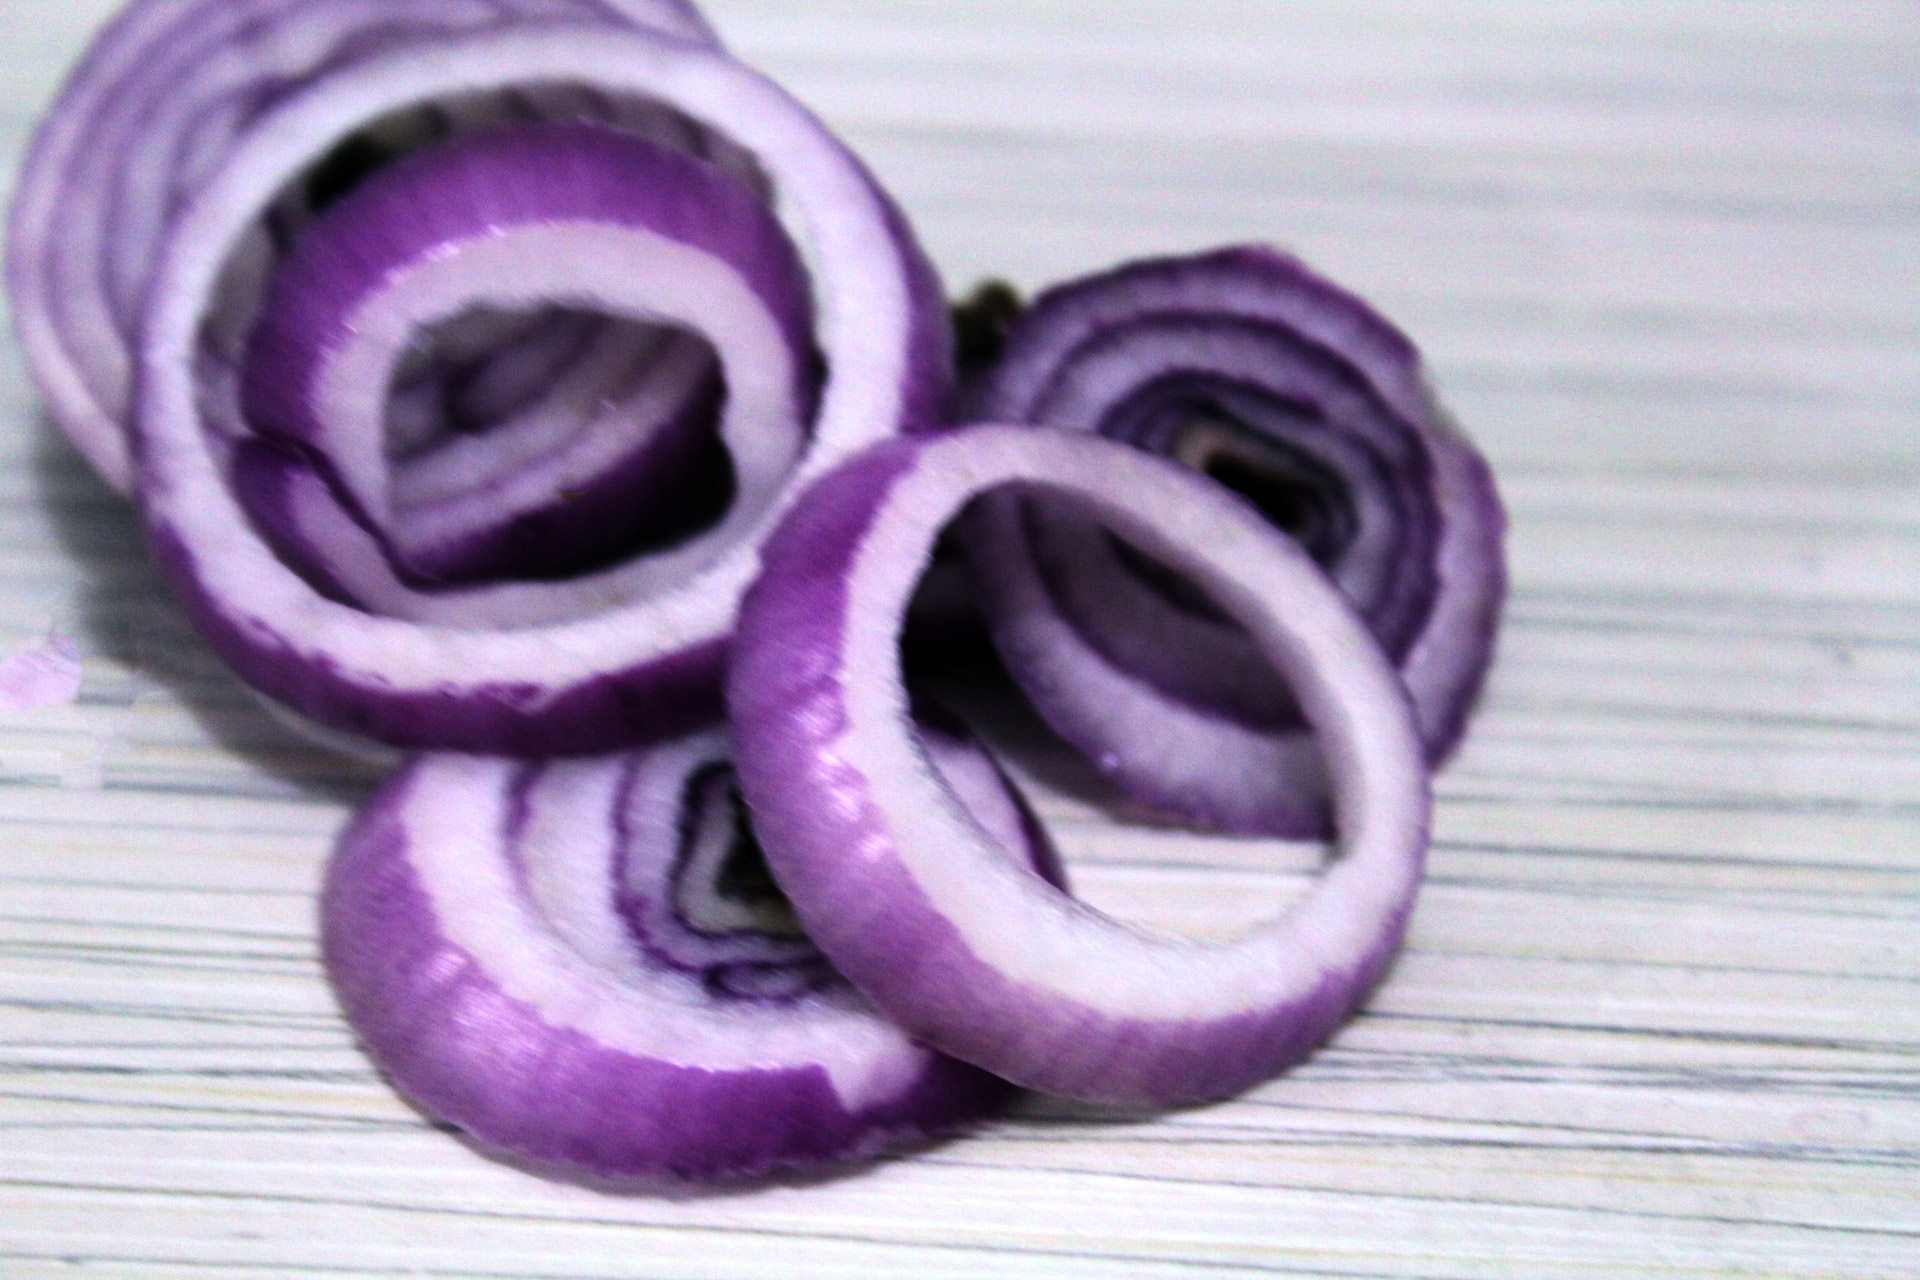 Hubby's Favorite Onion Rings